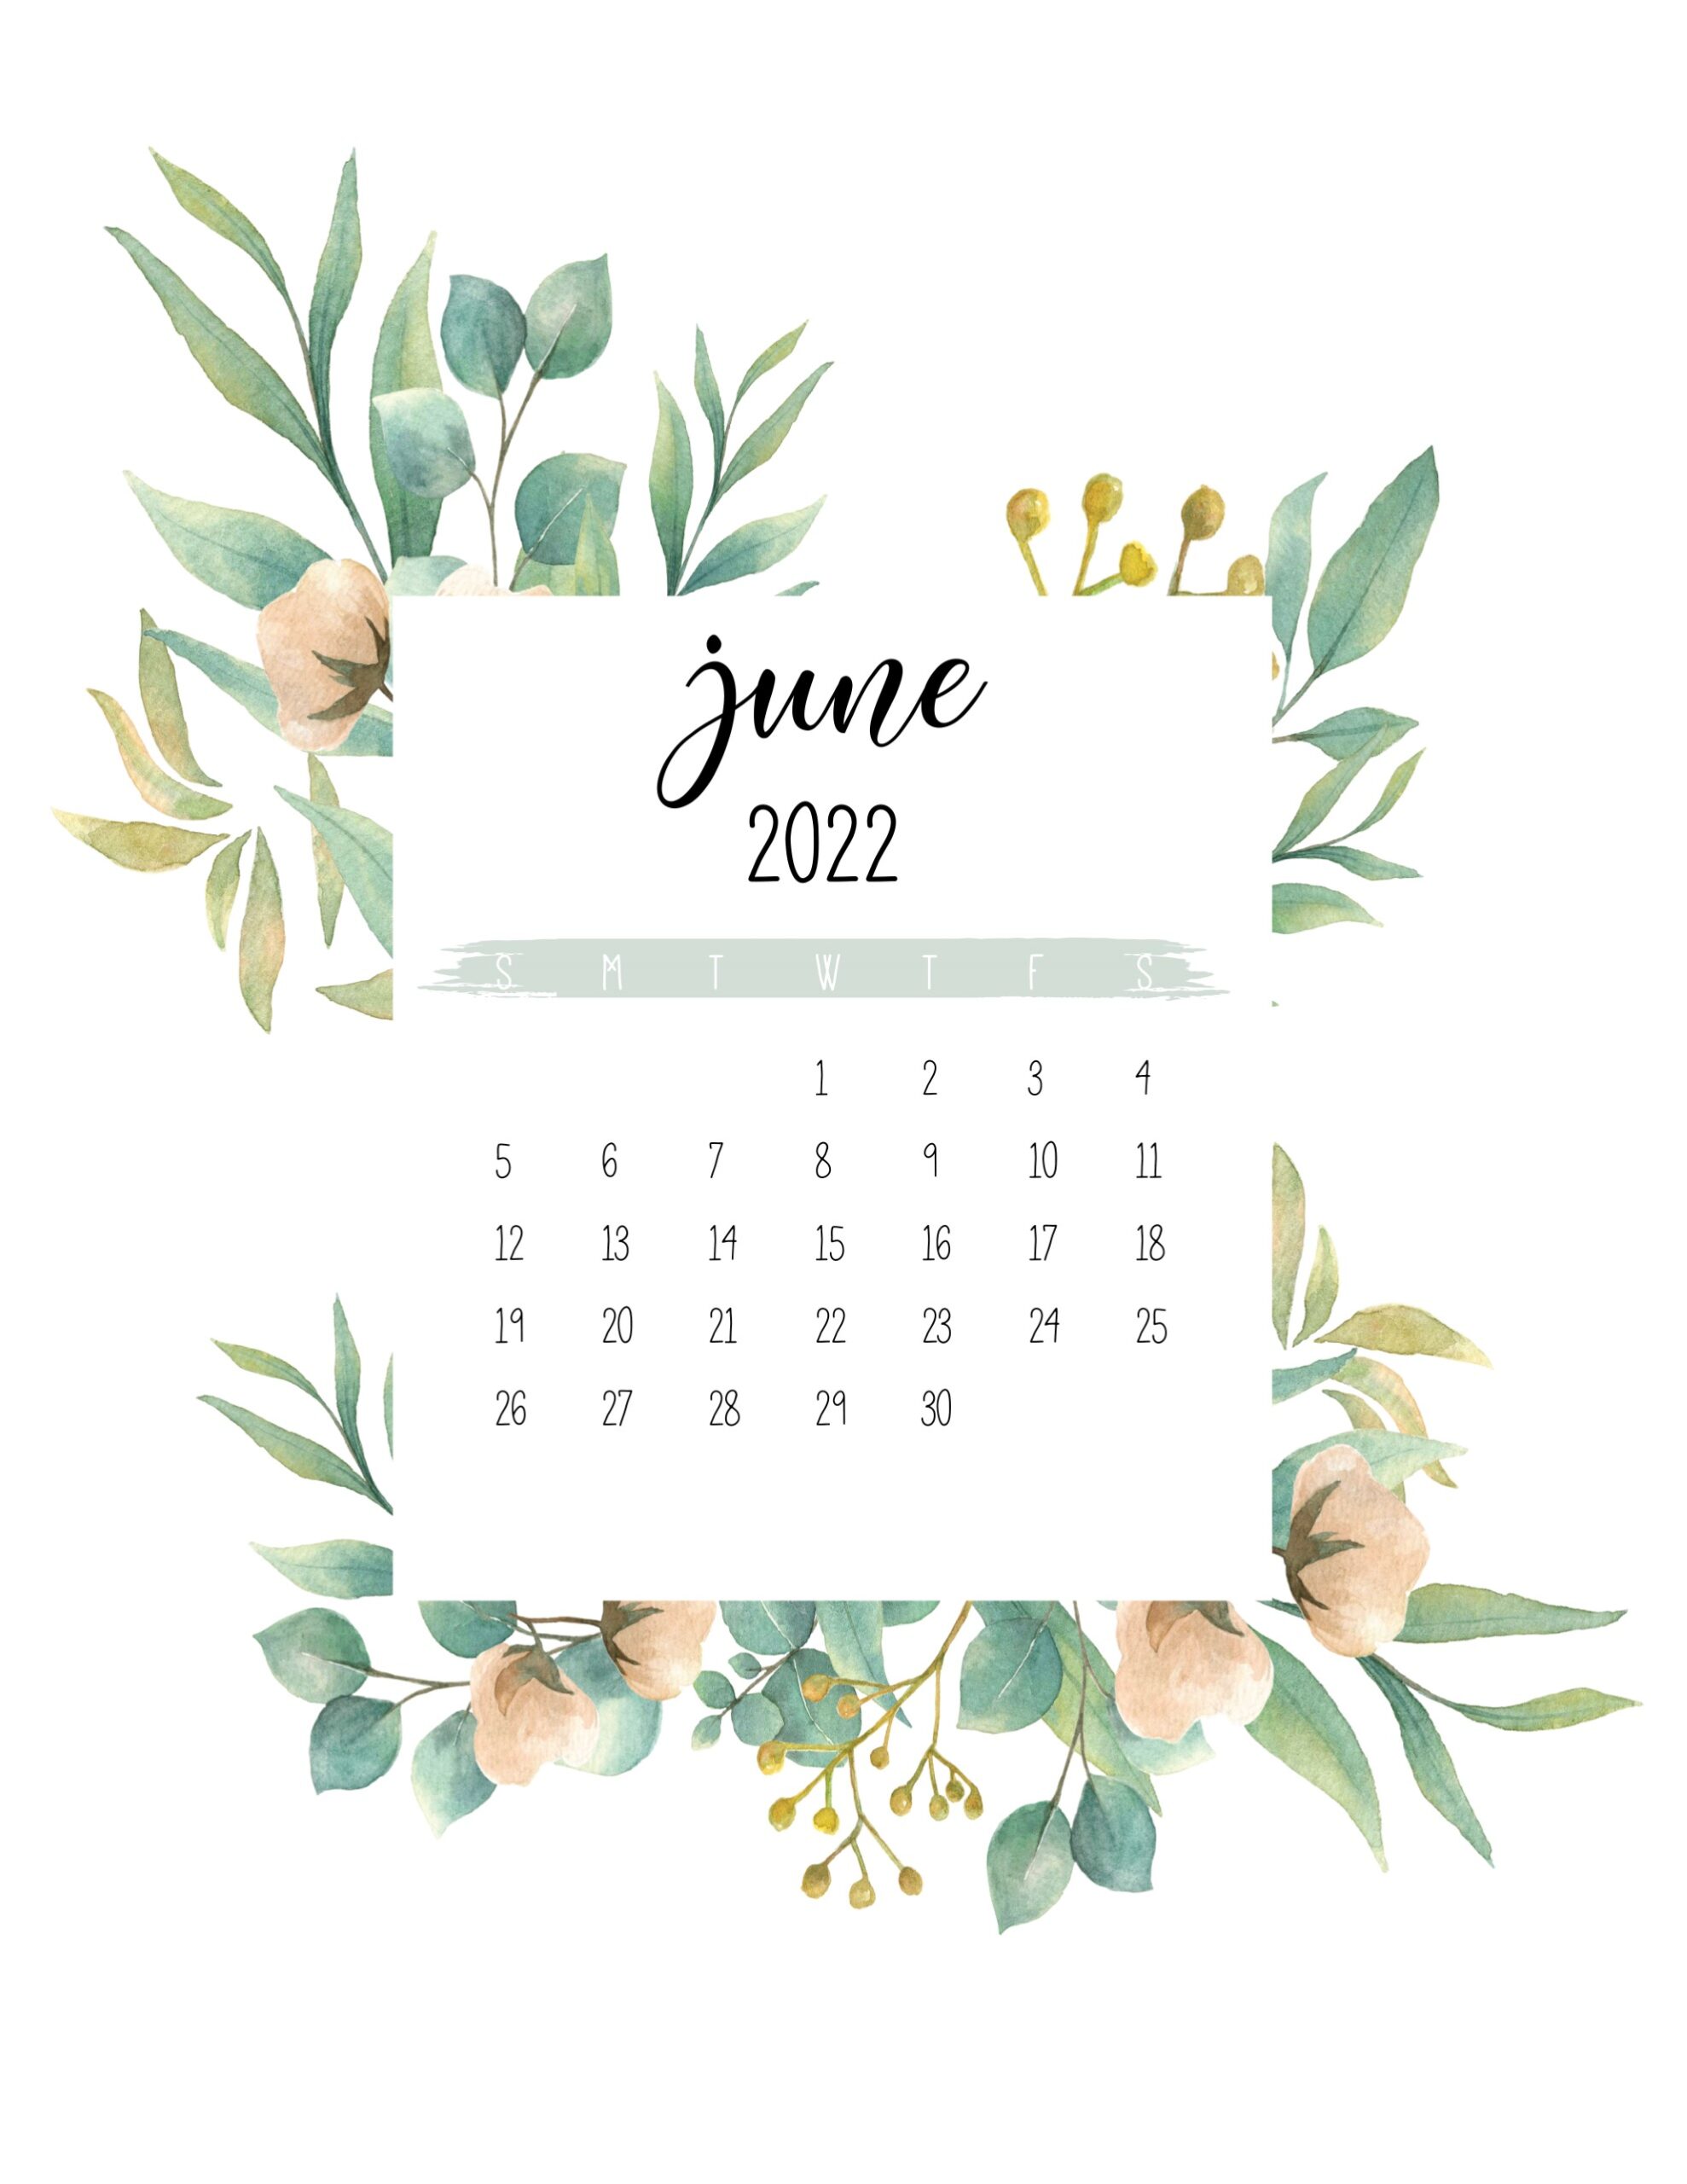 June 2022 Wallpaper Calendar Free Printable June 2022 Calendars - 100'S Of Styles - All Free!